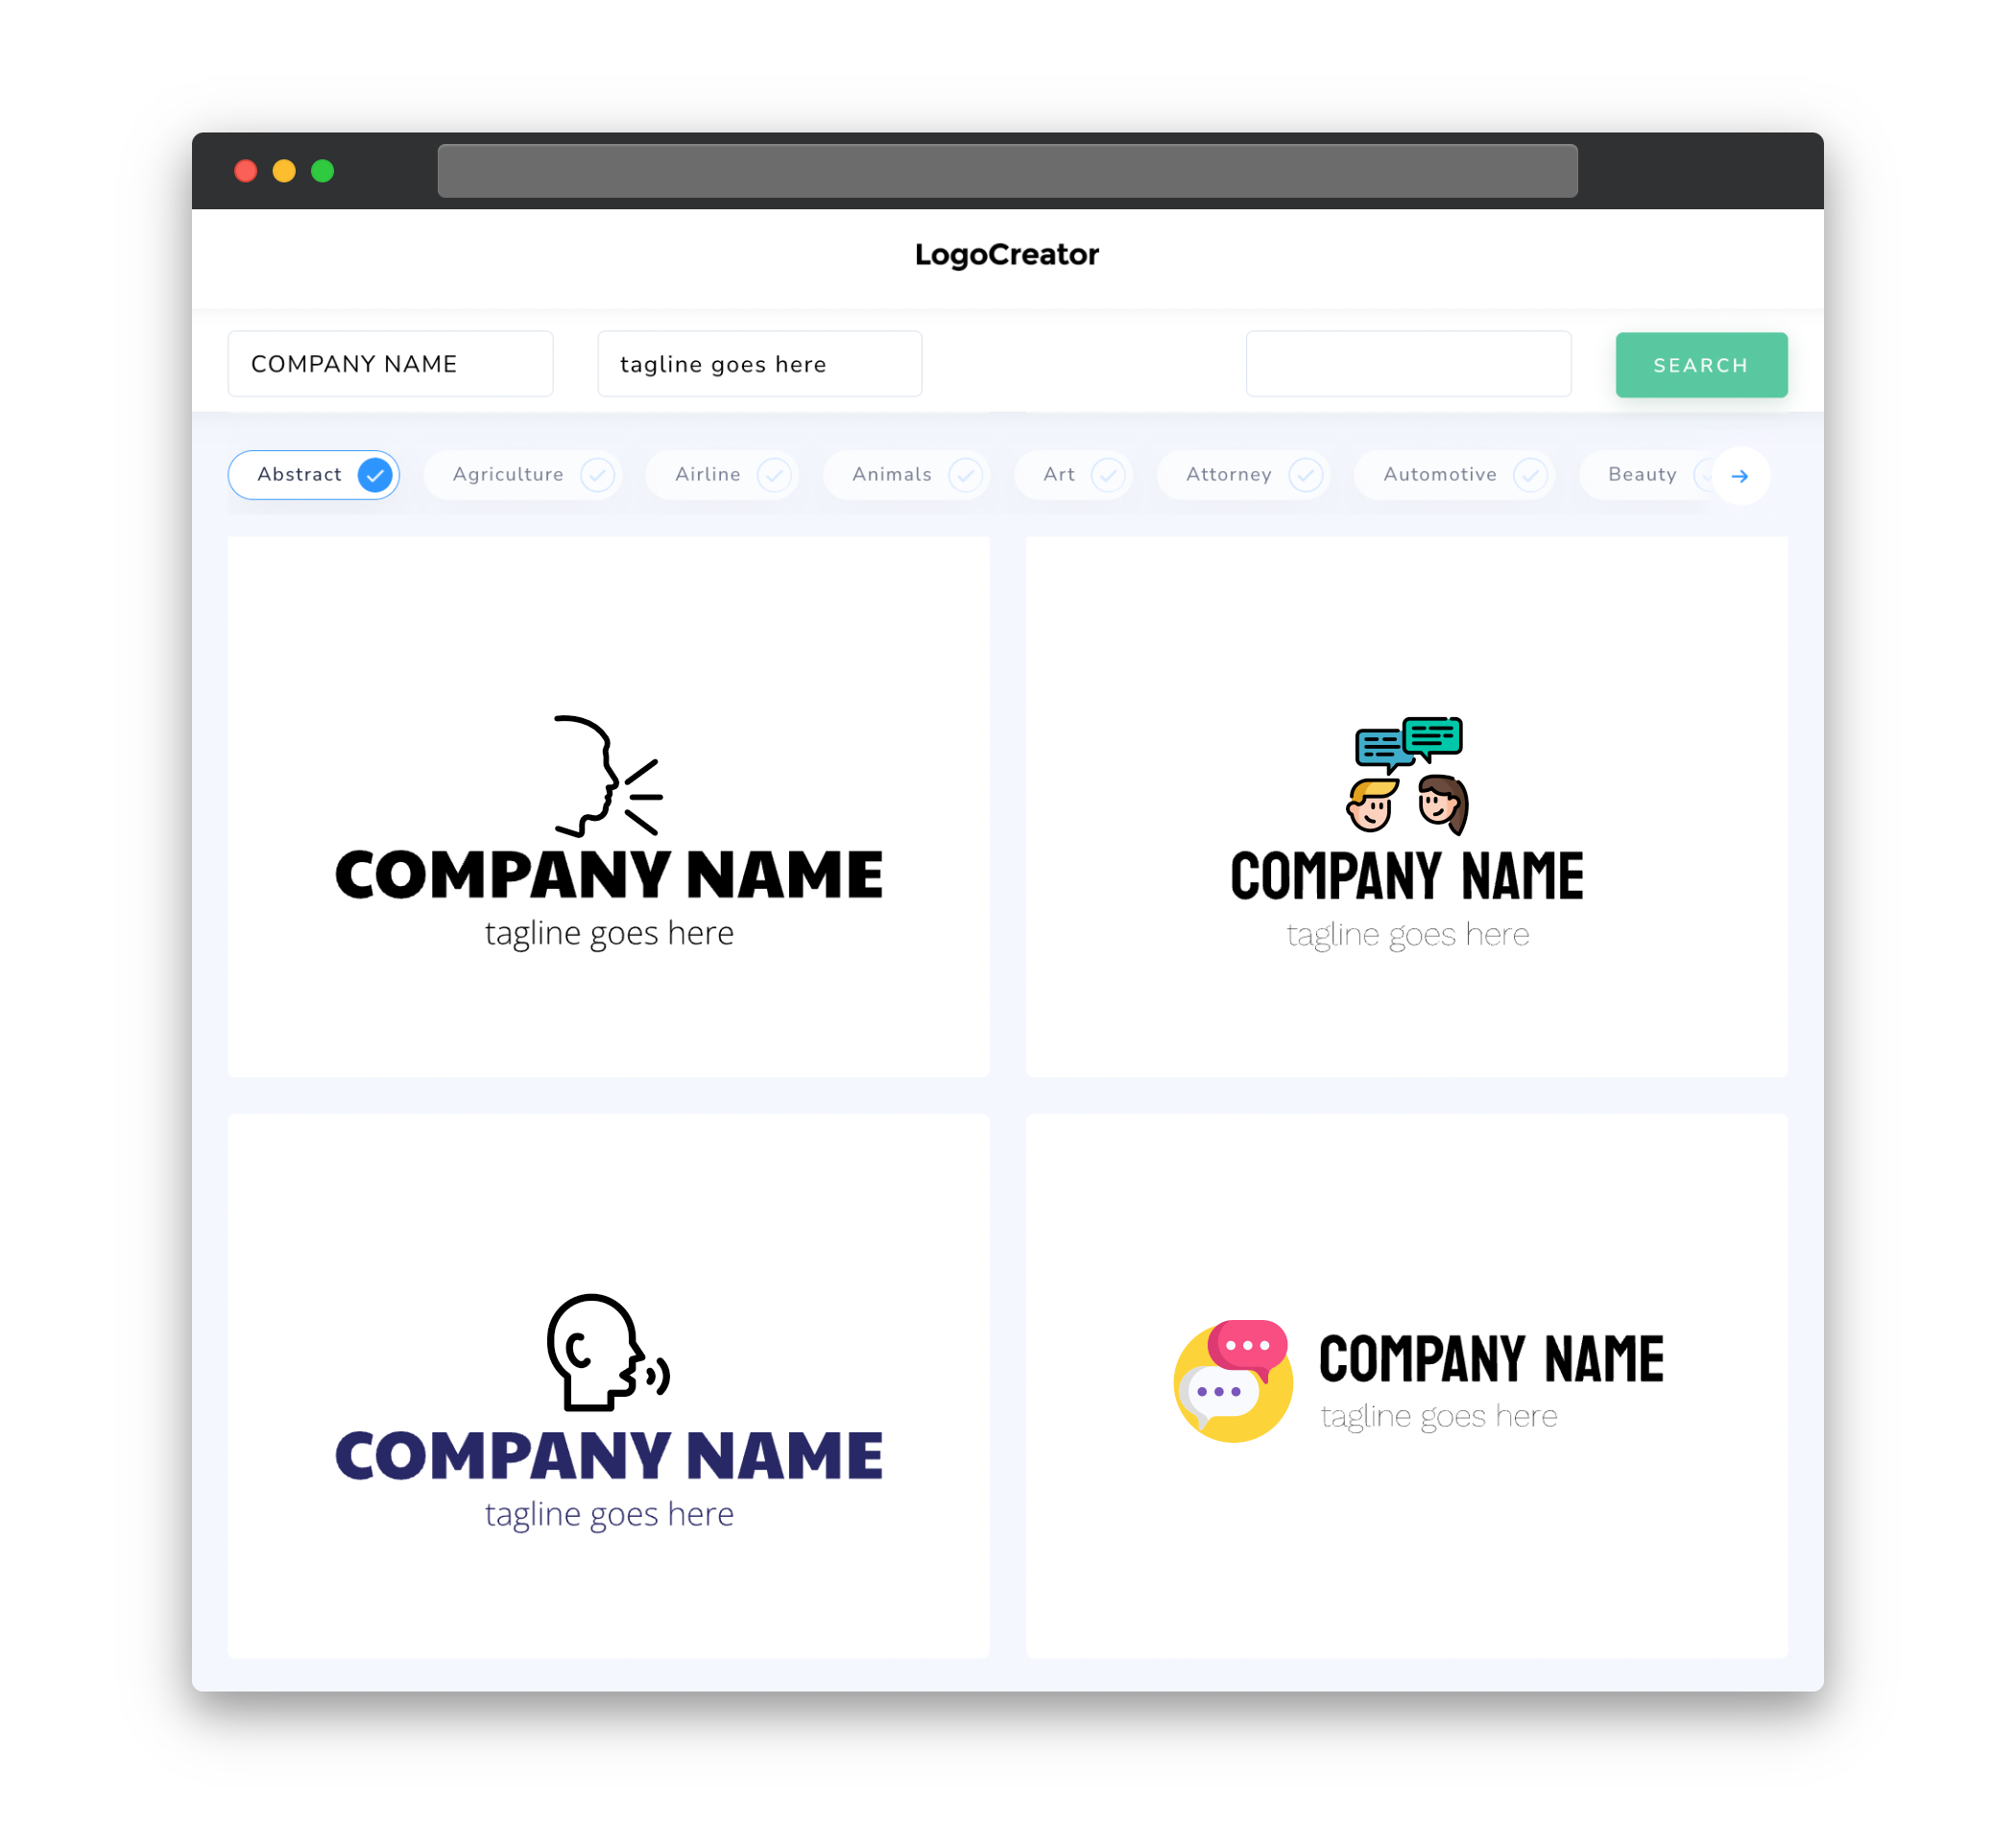 Fluent Logo Design: Create Your Own Fluent Logos